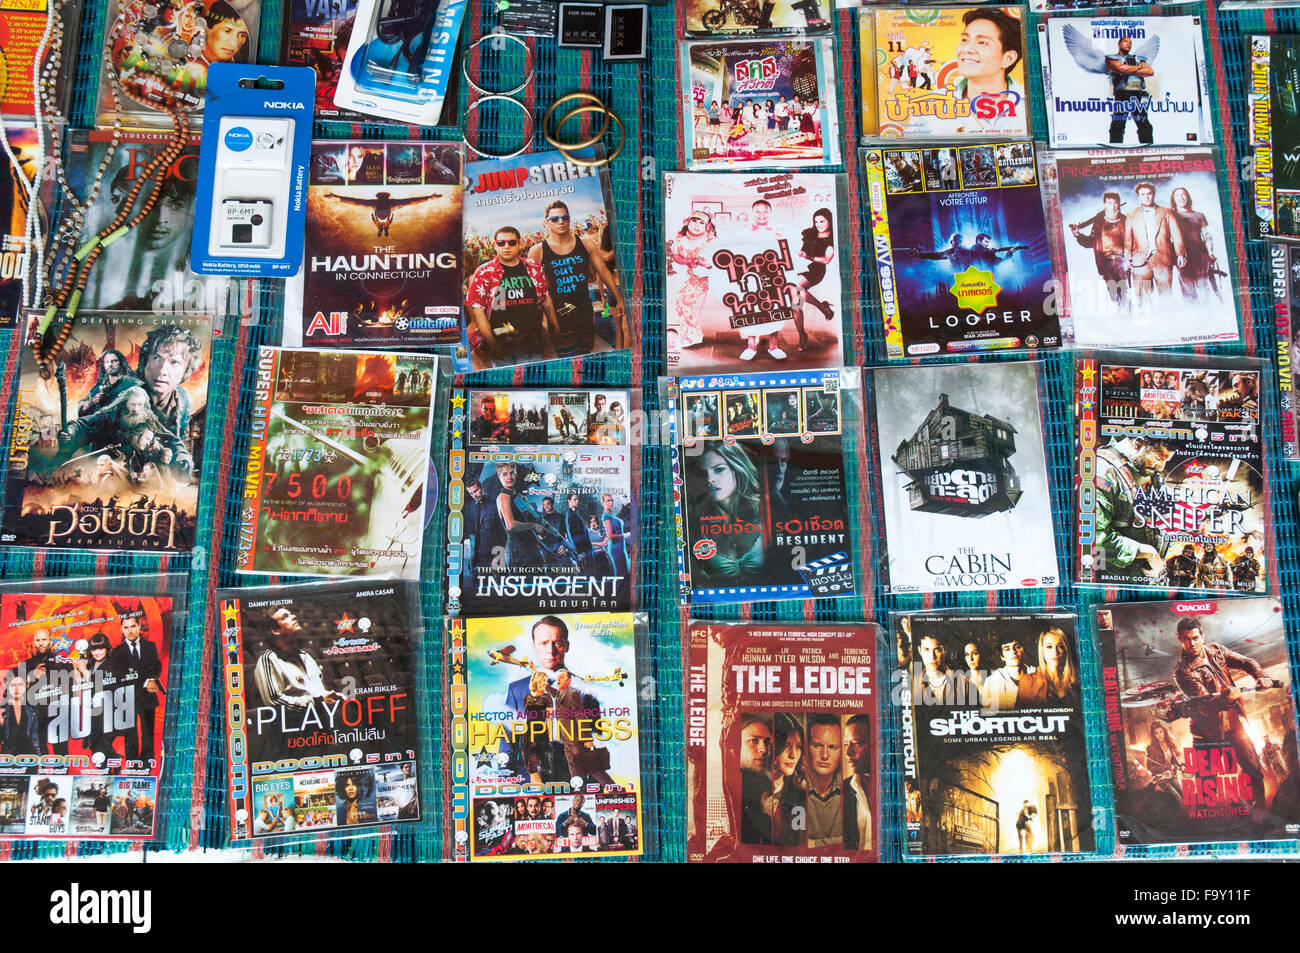 DVD store display in Bangkok, Thailand Stock Photo - Alamy